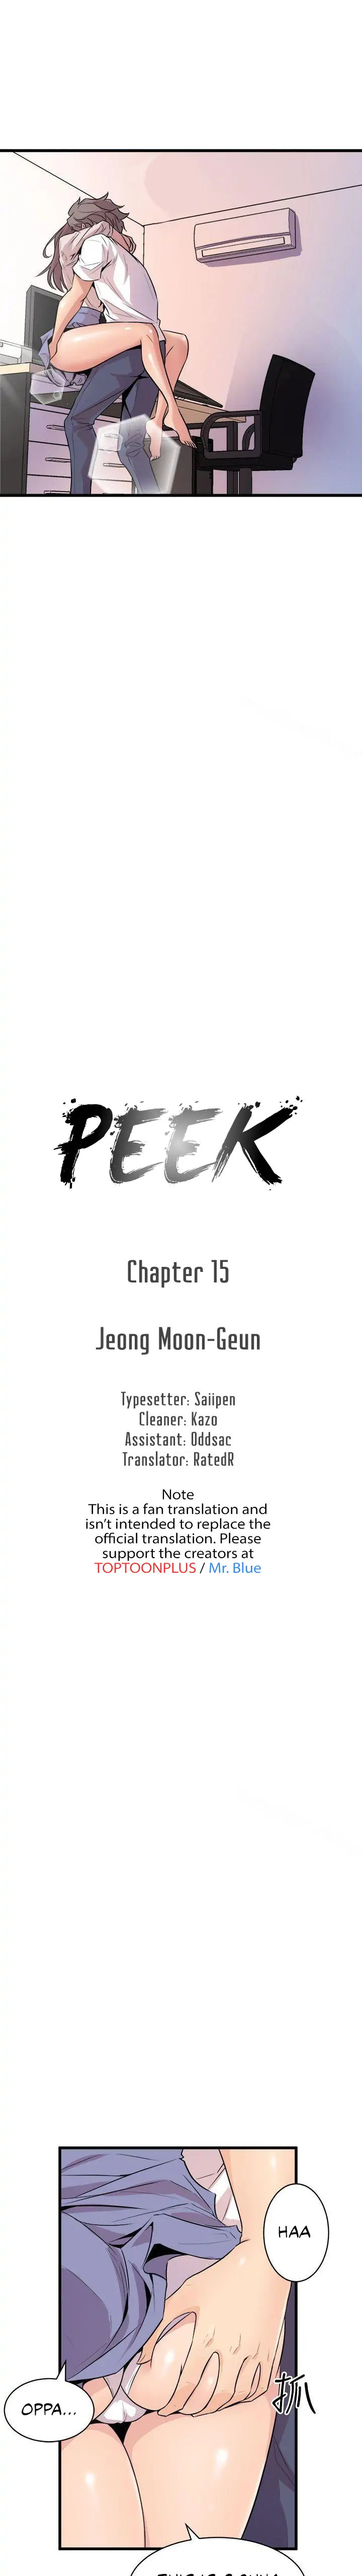 Peek - Chapter 15 Page 2